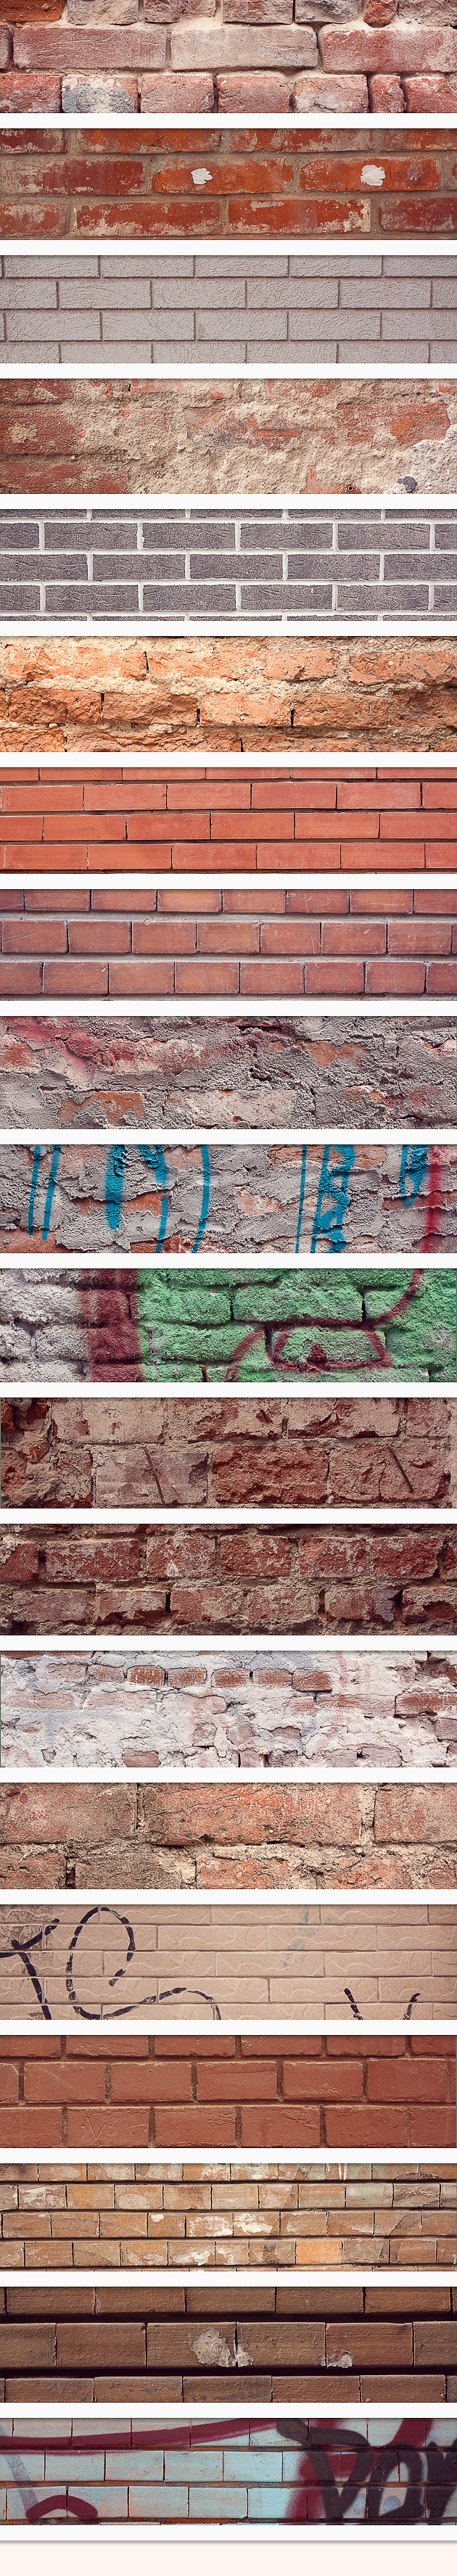 Brick Wall Textures 2